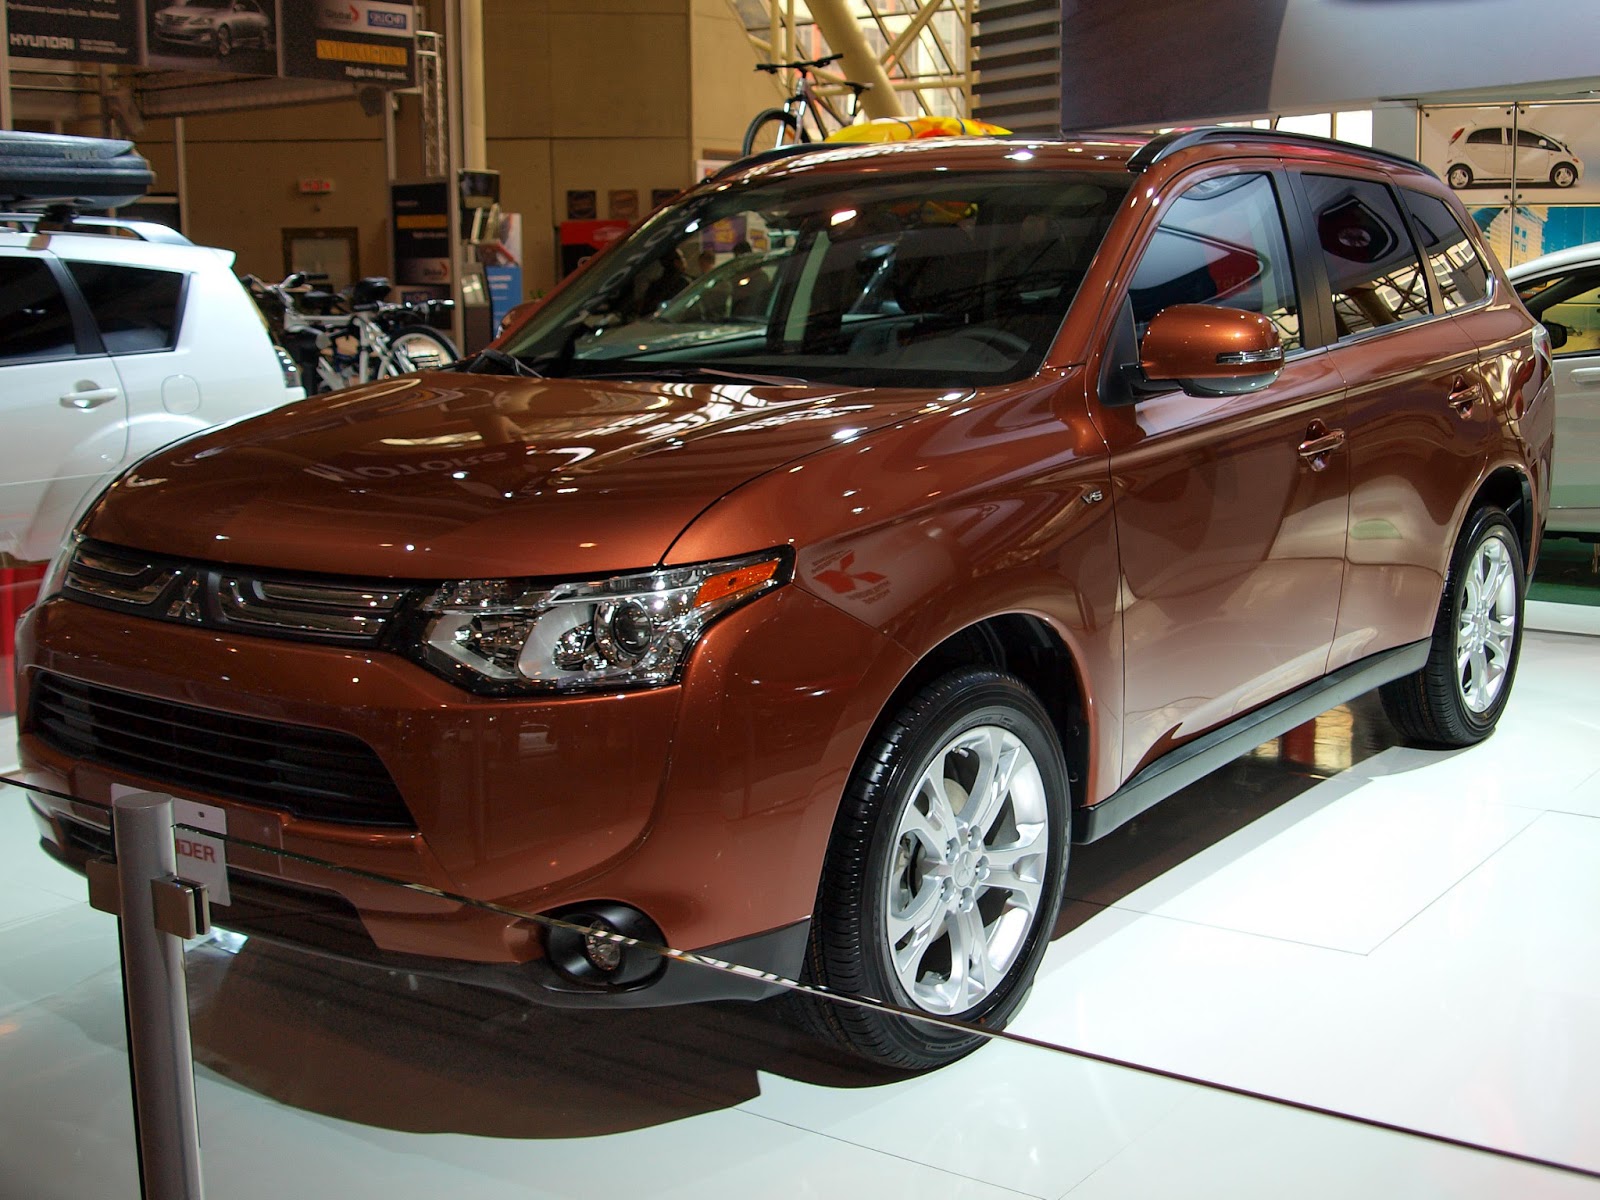 New Car Models: Mitsubishi outlander 2014